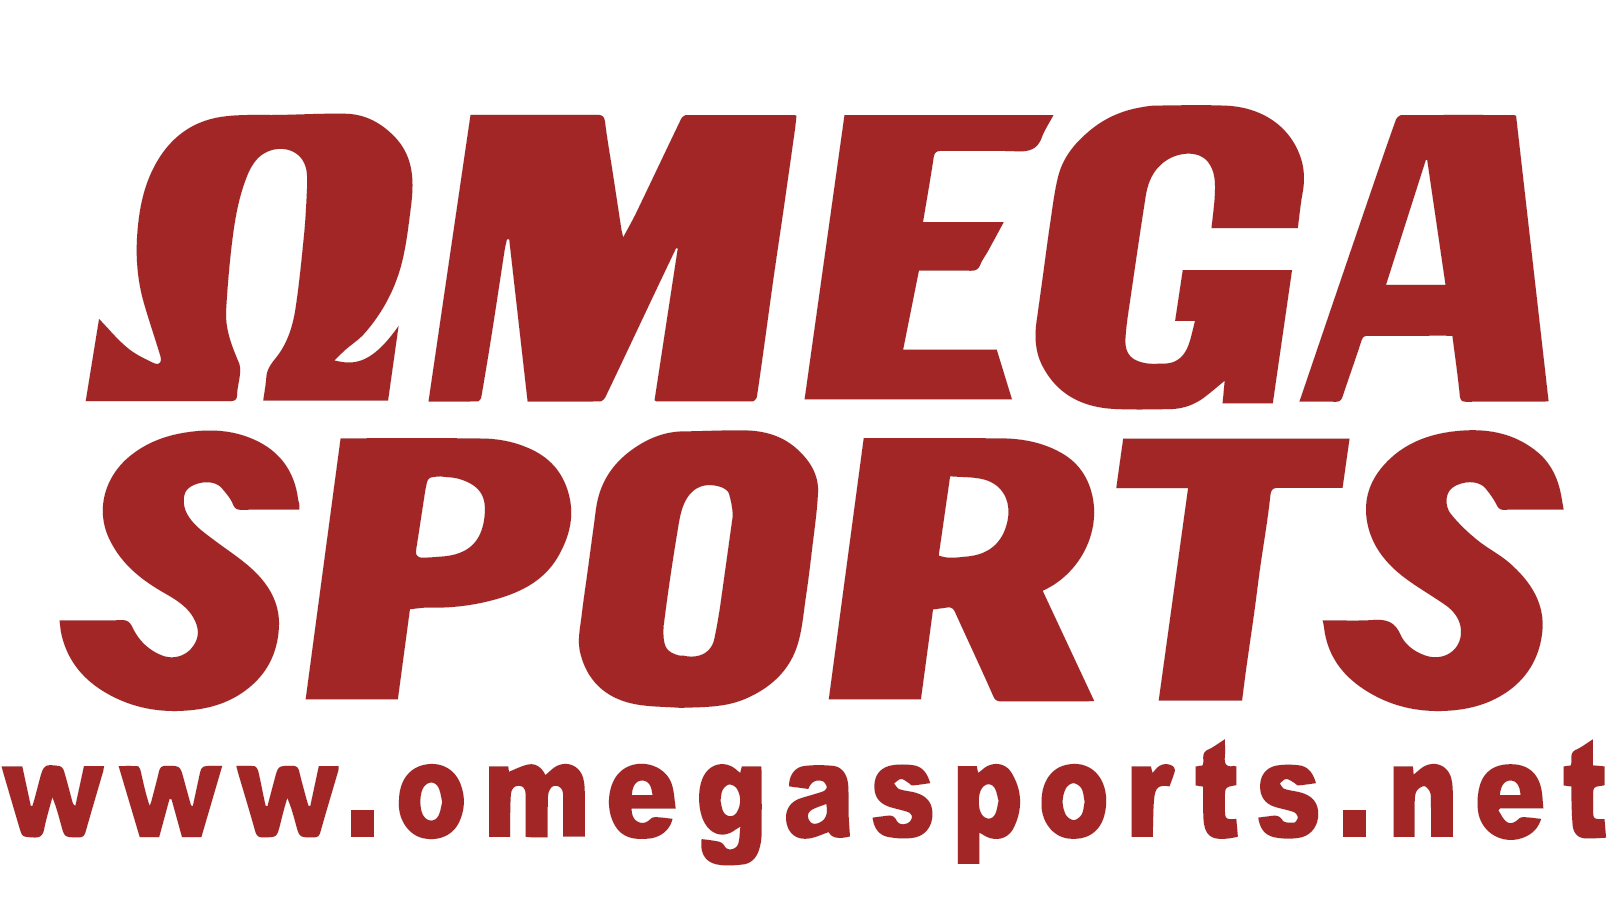 Sponsor Omega Sports